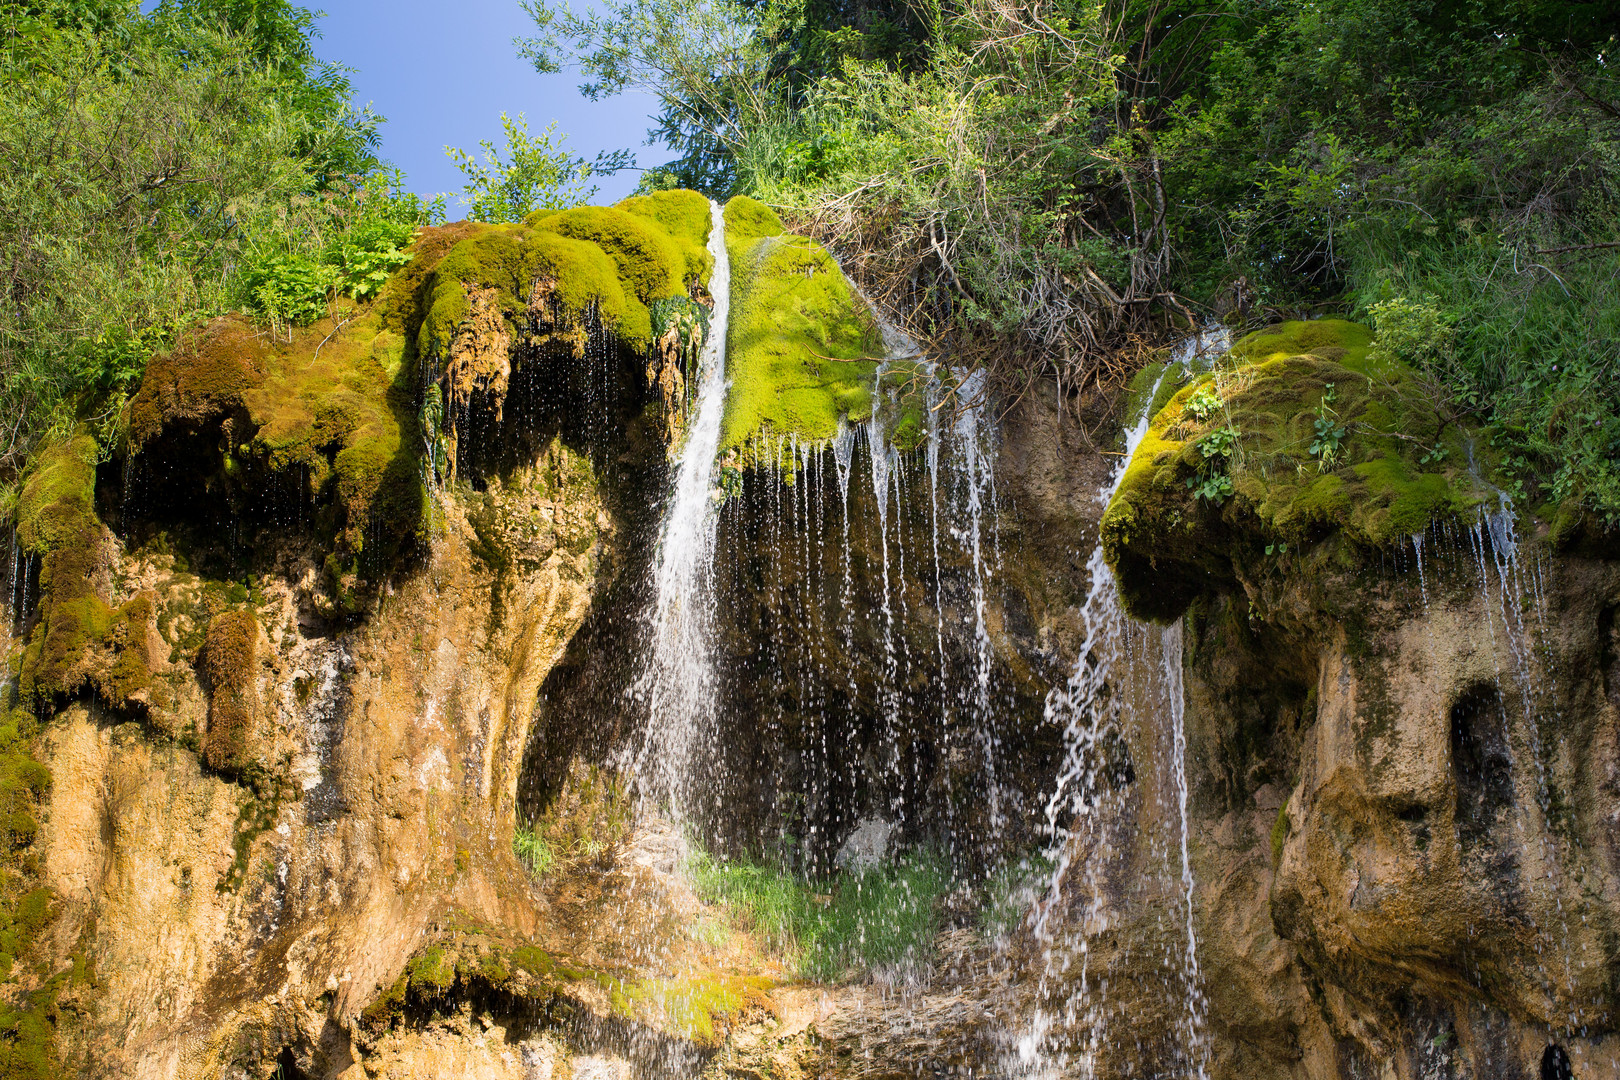 Cascada lui Avram Iancu din Vidra